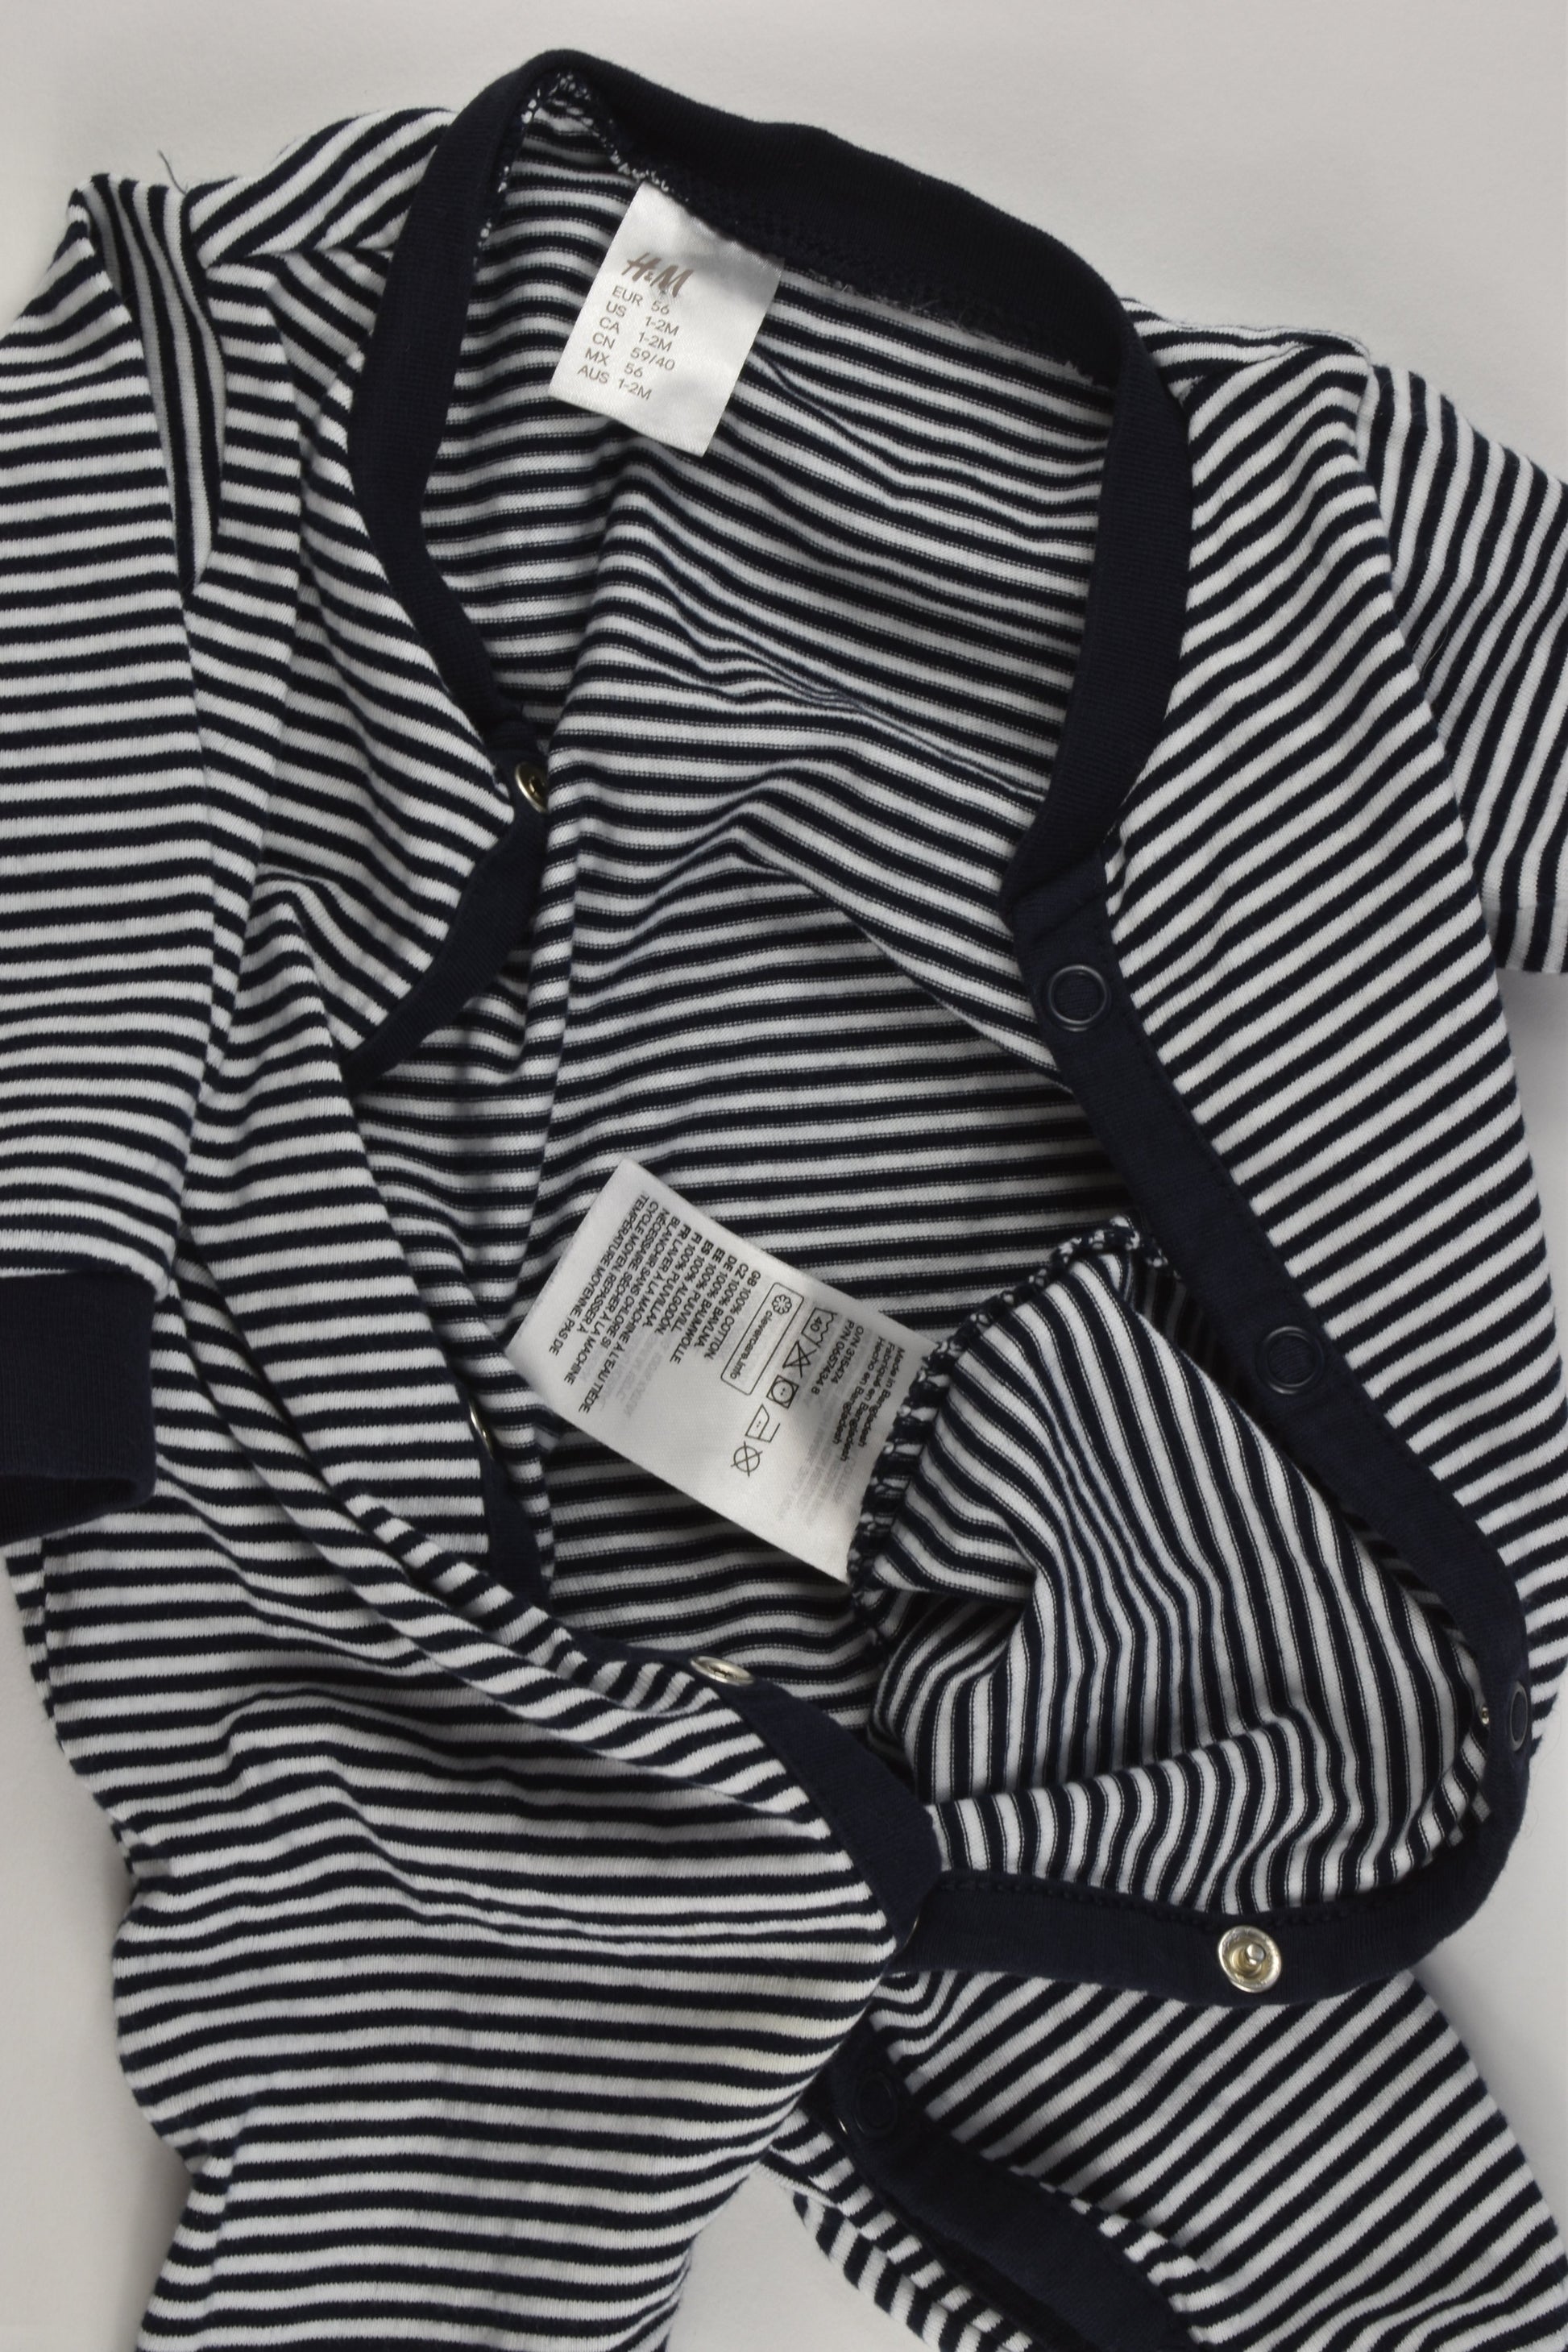 H&M Size 000 (56 cm, 1-2 months) Striped Romper